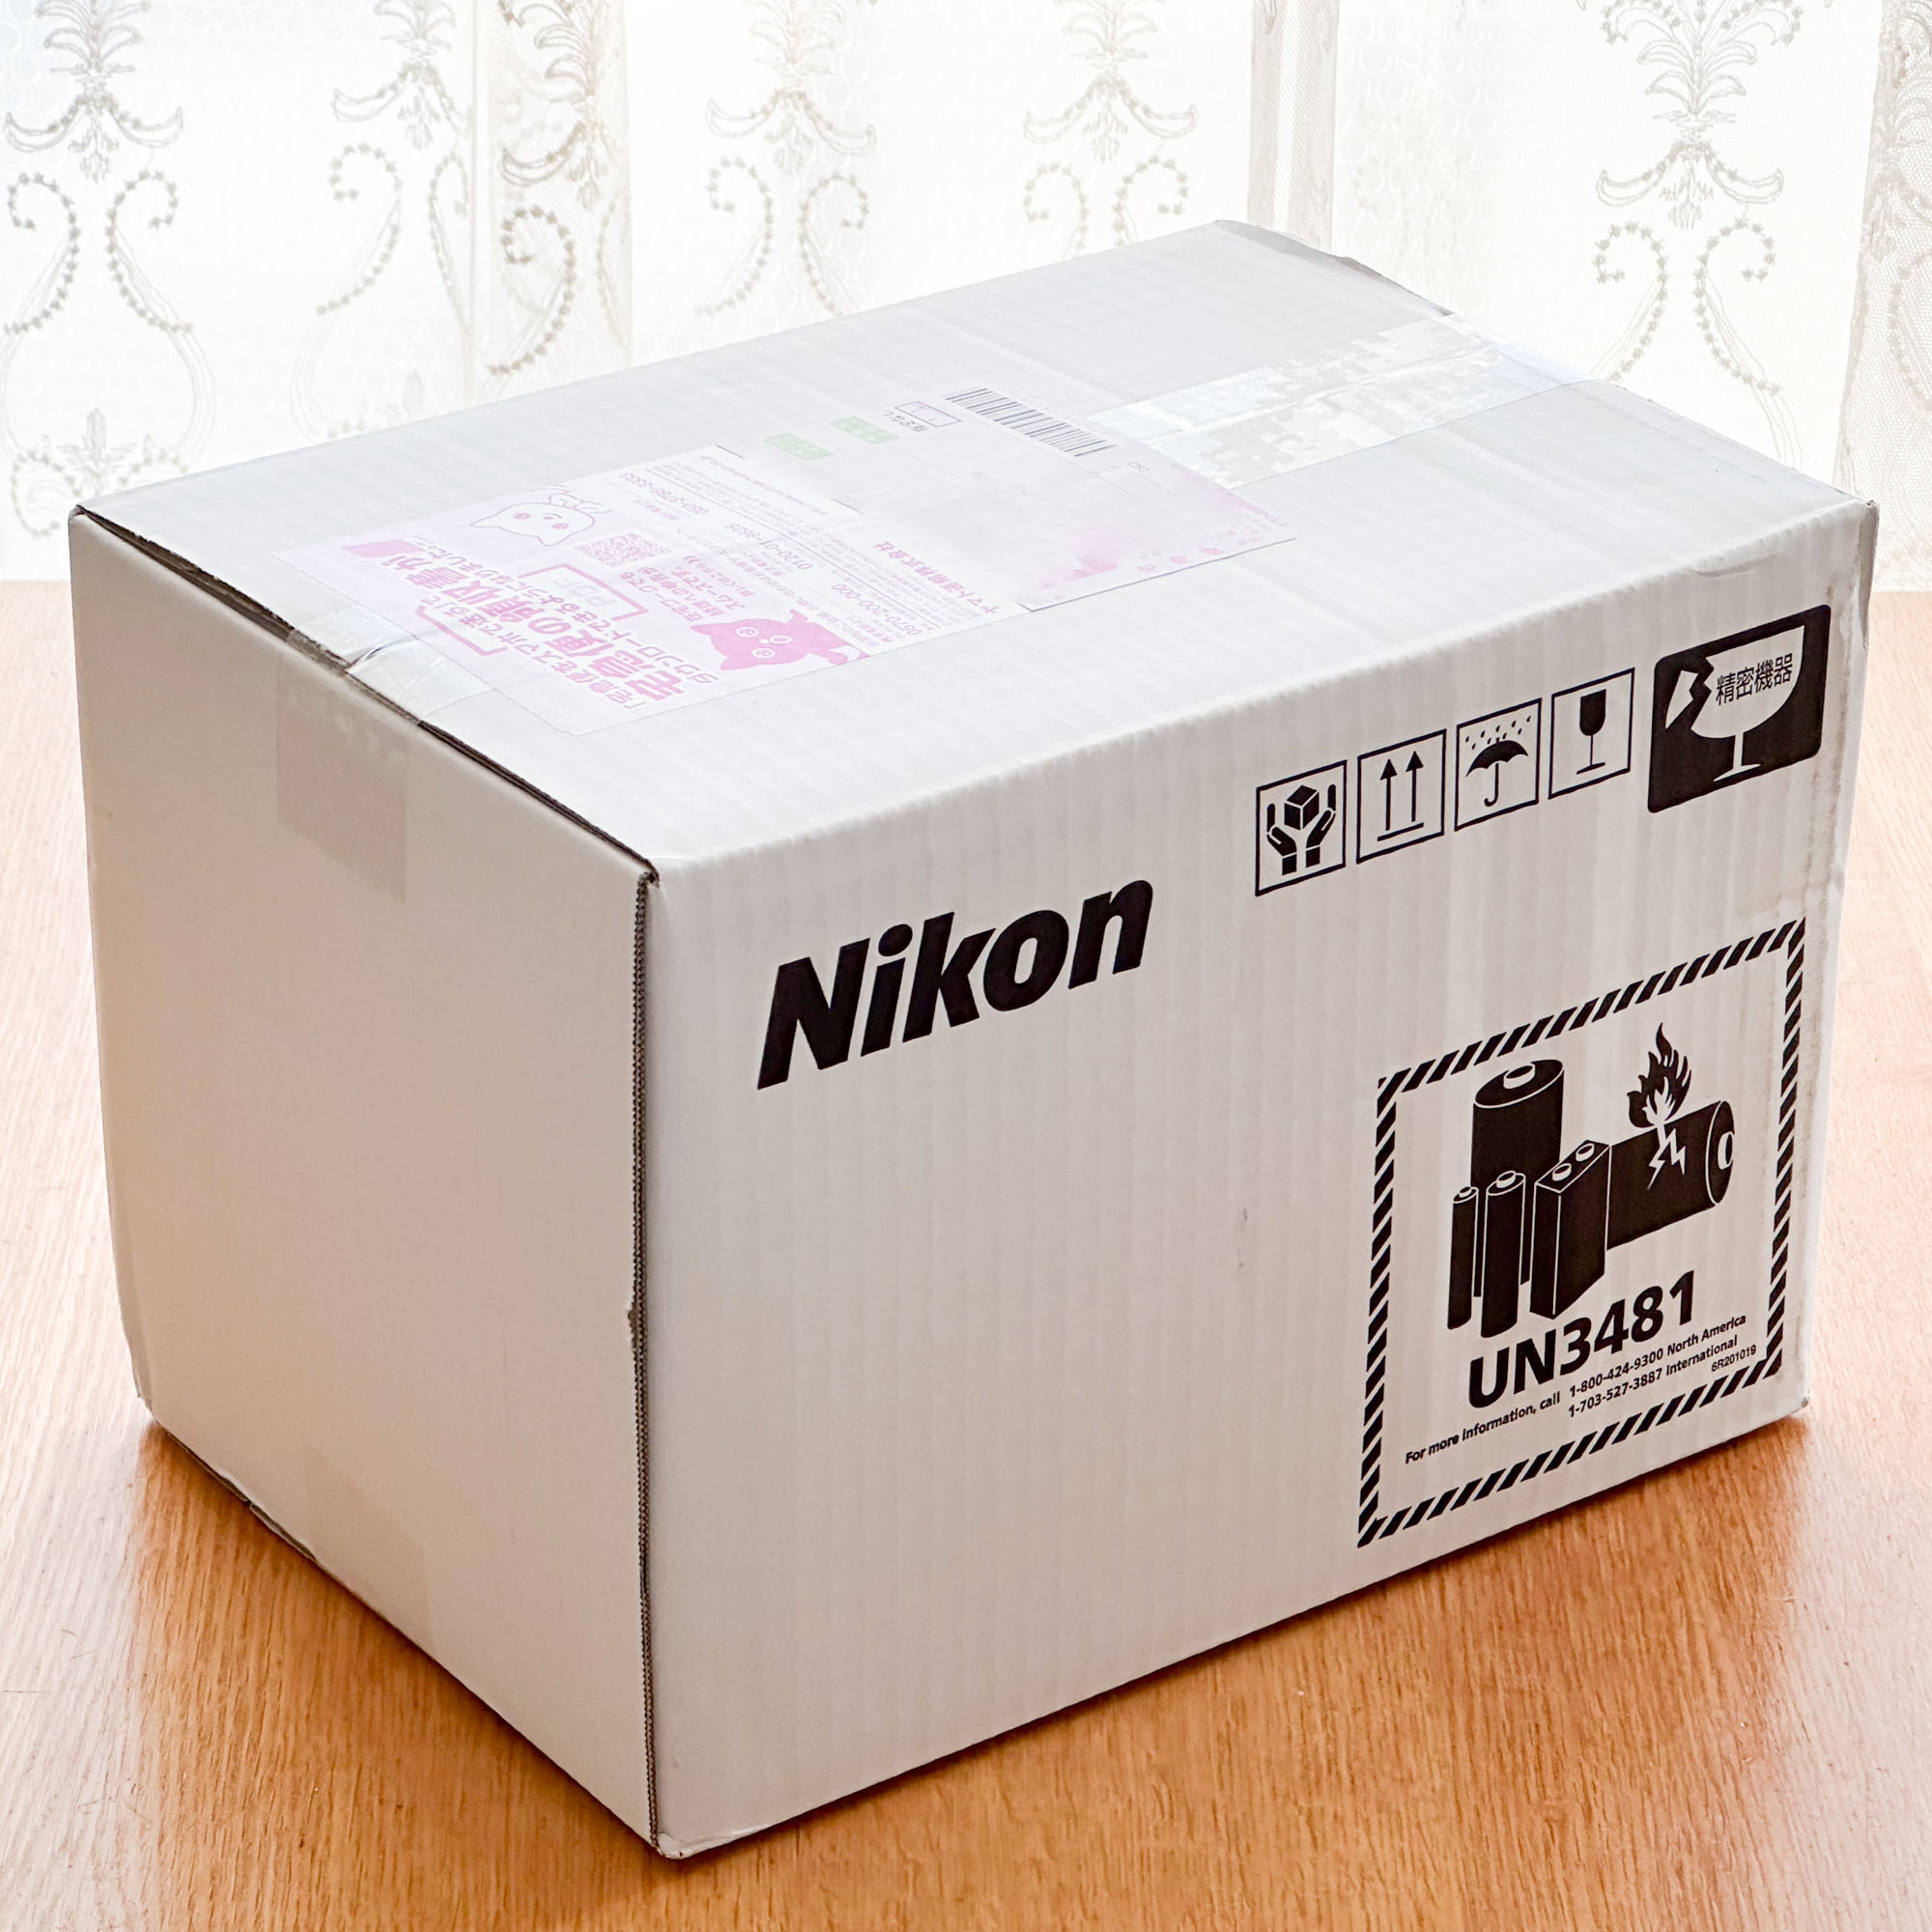 Nikonから送られて来たダンボールの中にNikon Z8リコール対策品が入っている